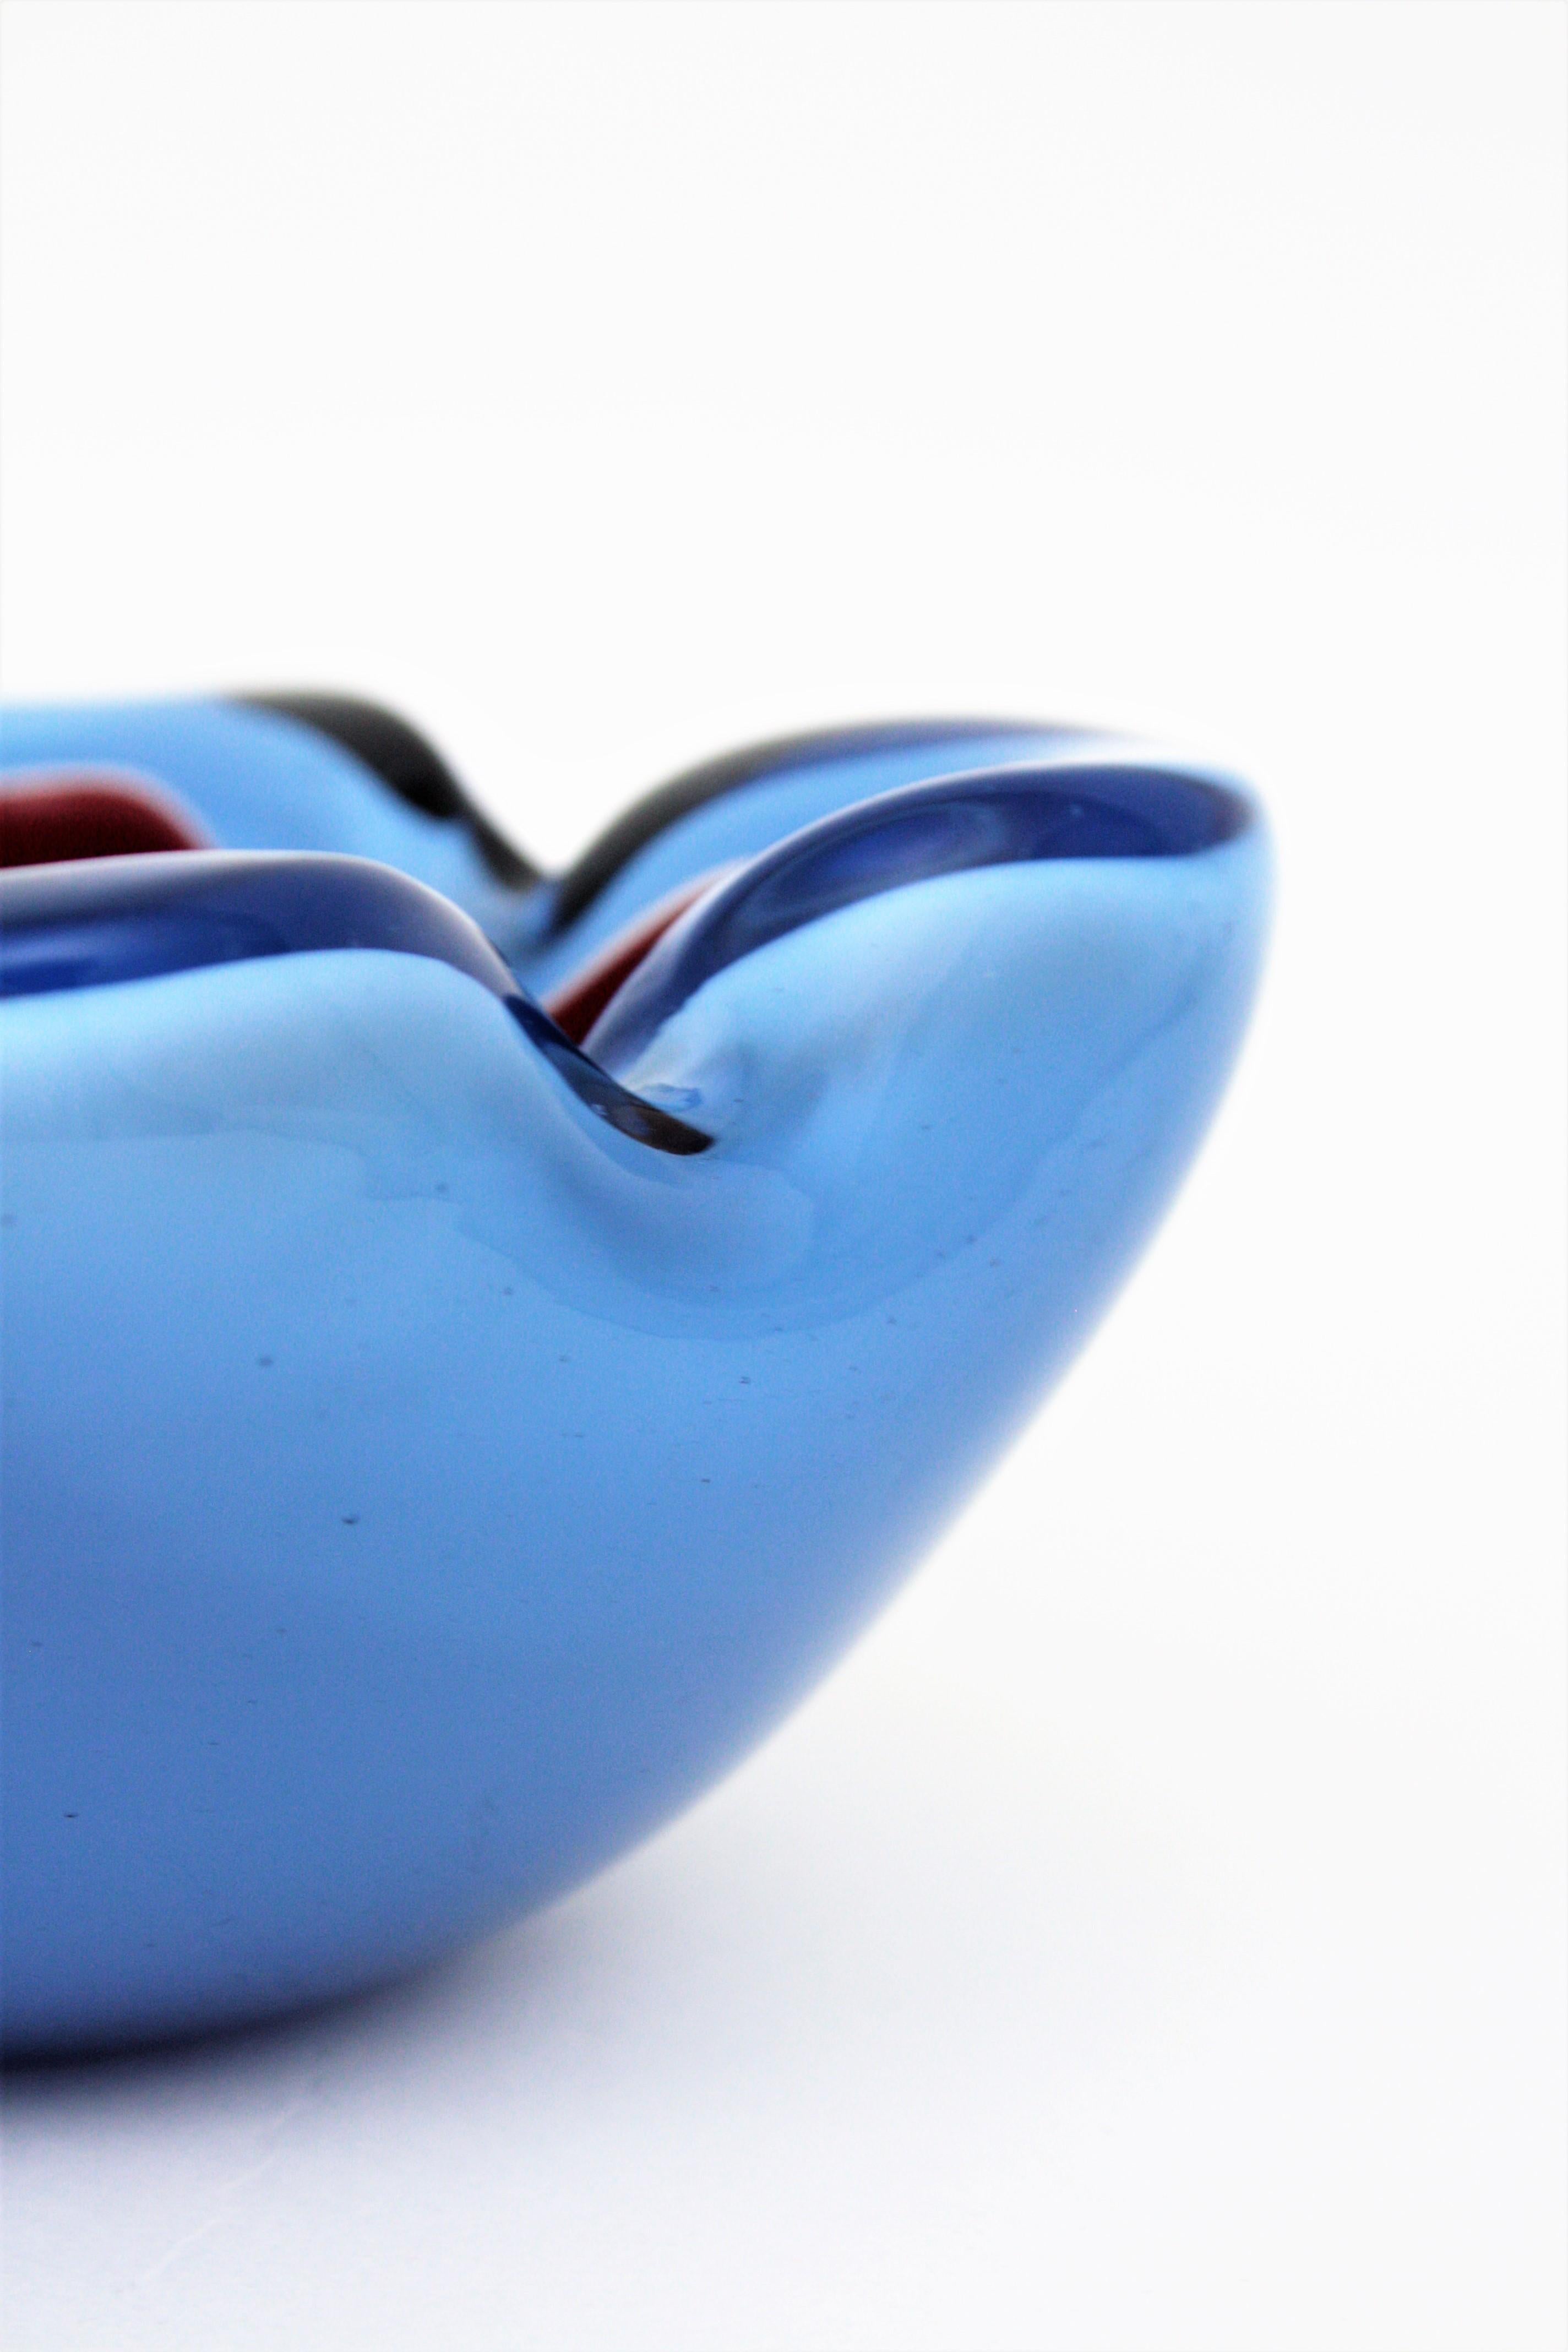 Seguso Murano Sommerso Red Blue Italian Art Glass Bowl / Ashtray For Sale 11